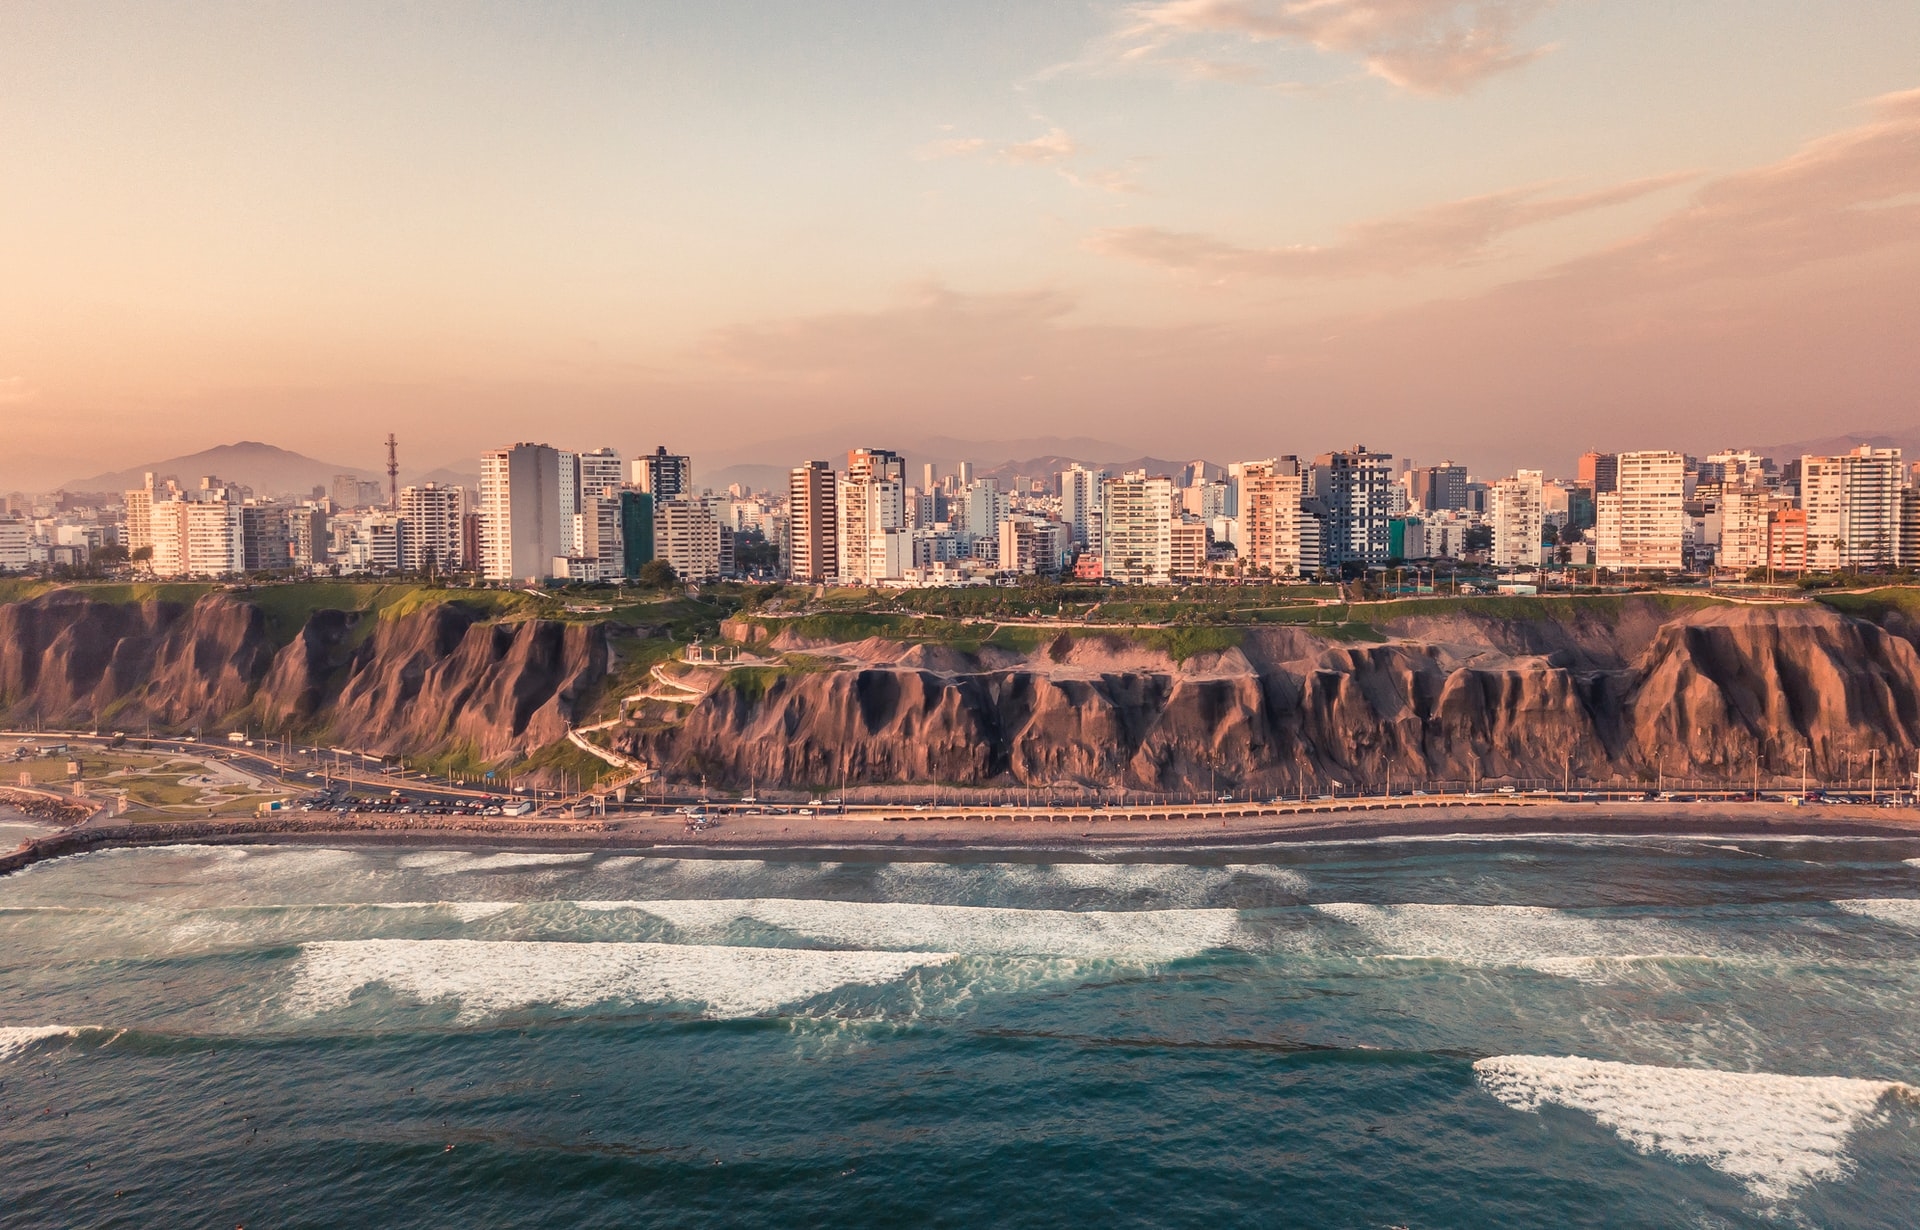 Lima: Peru's Capital City